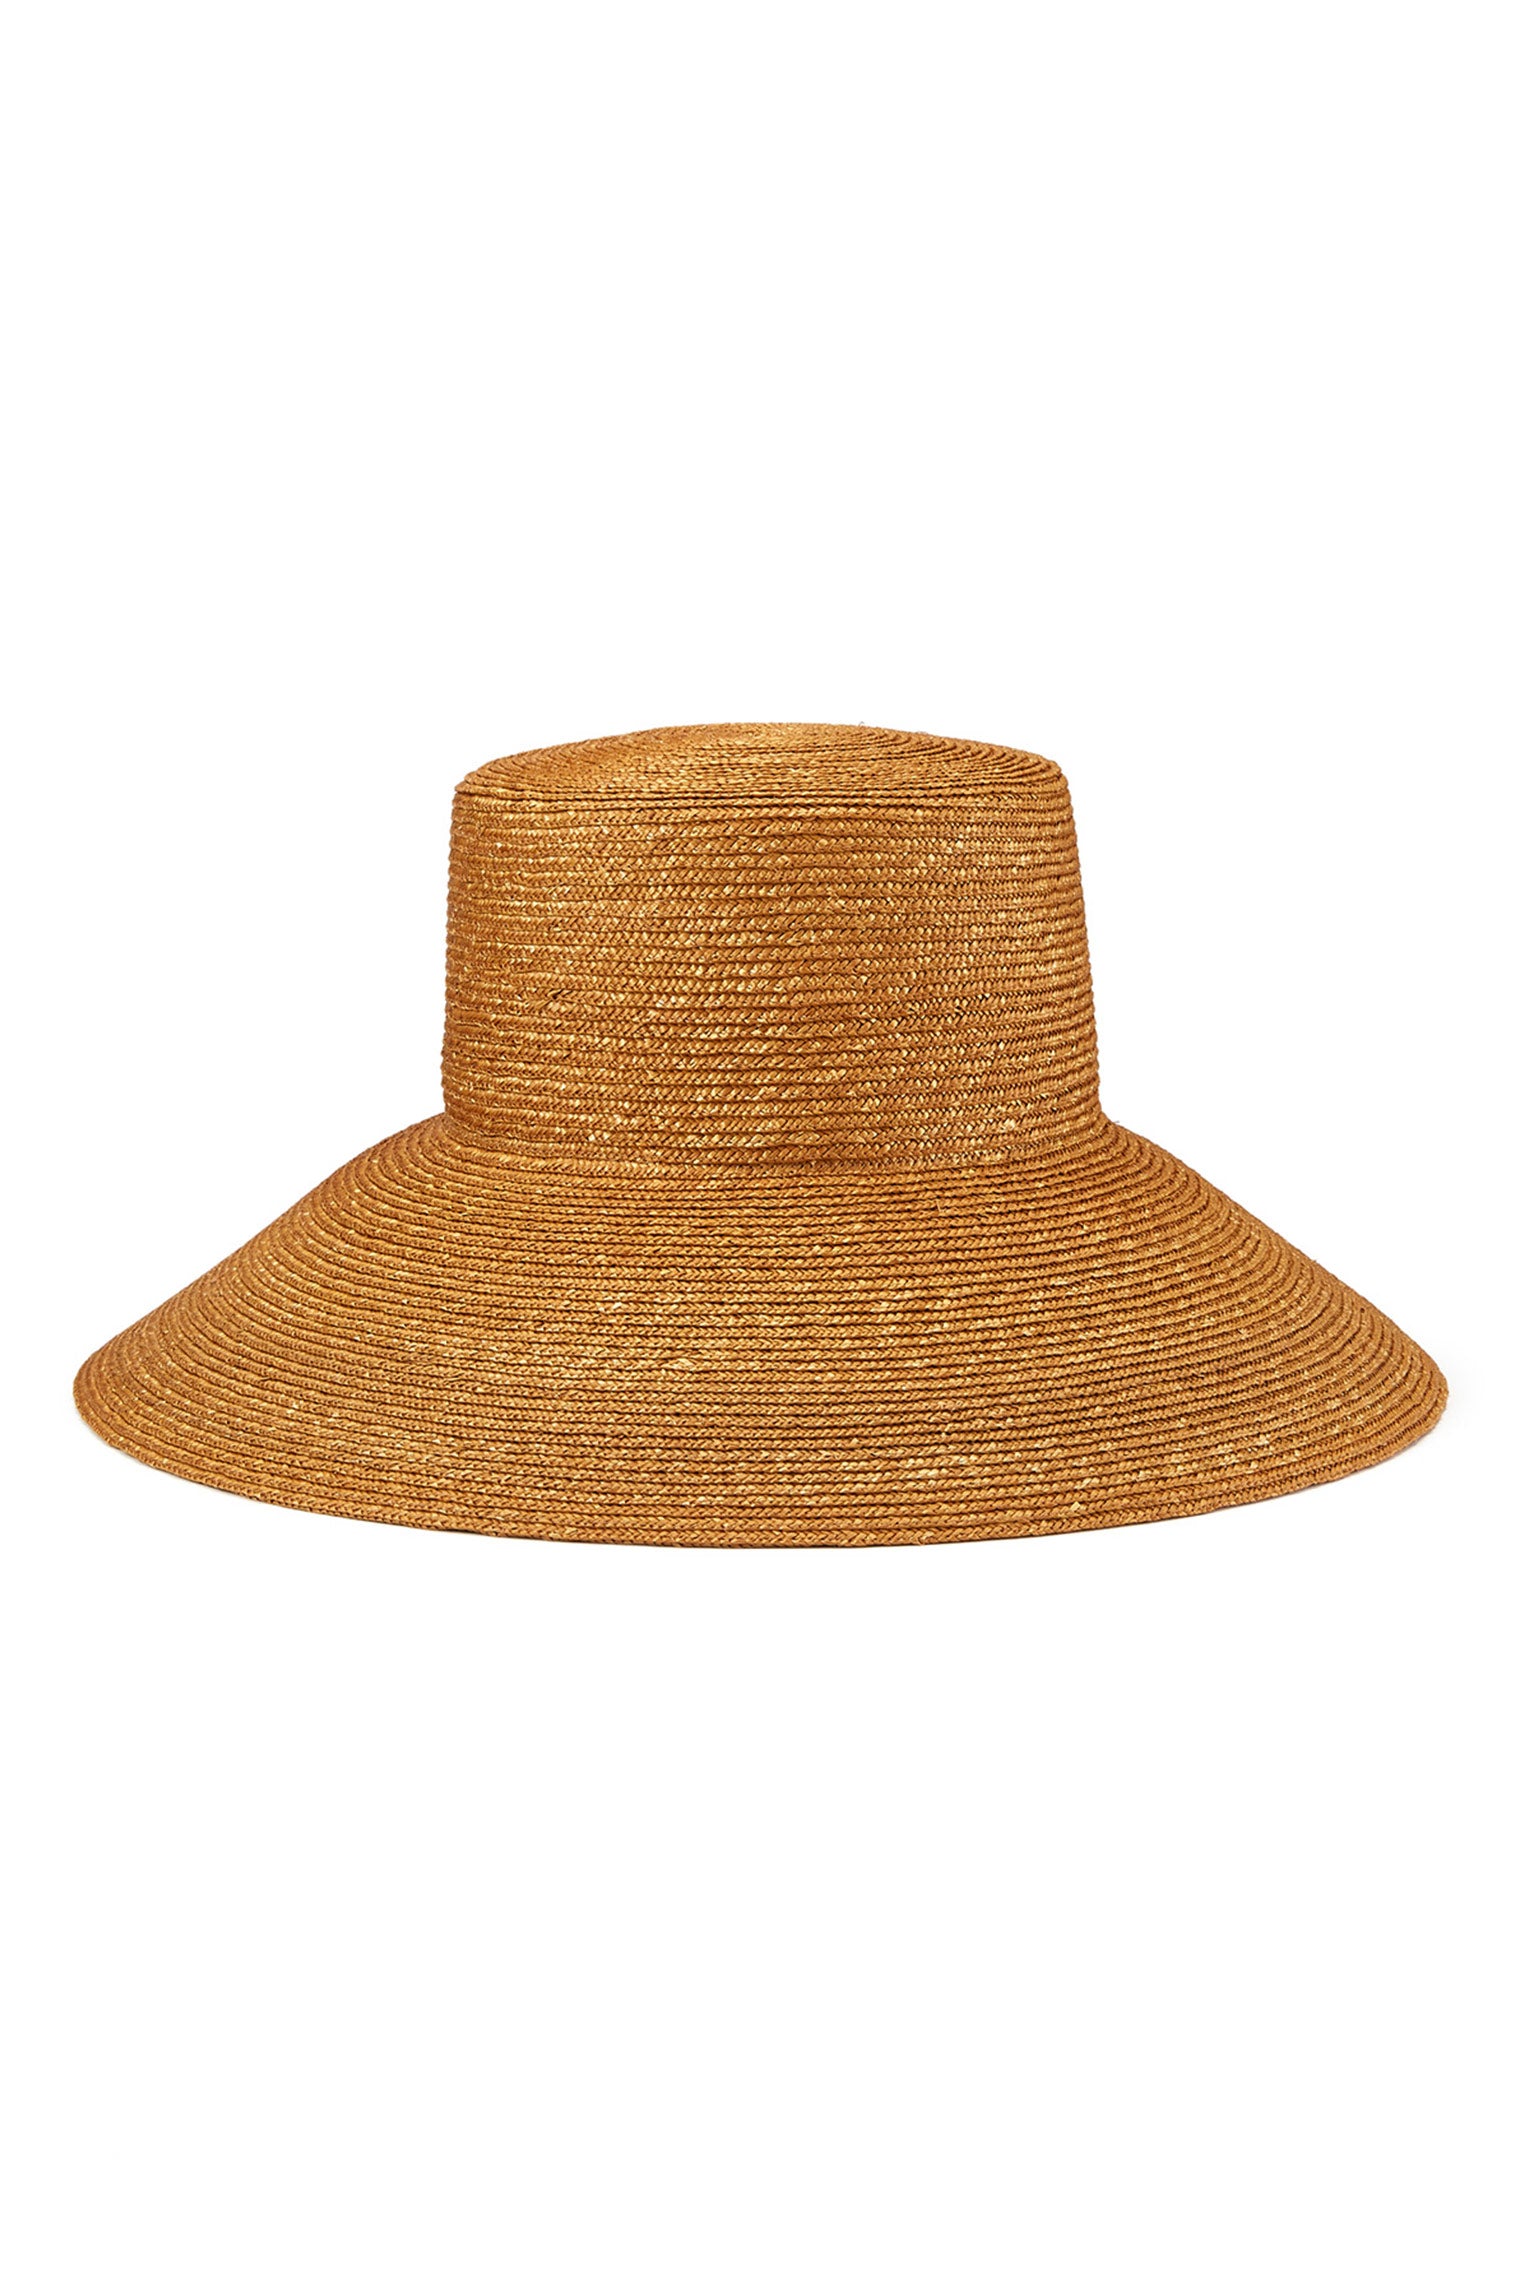 Sadie Straw Braid Fedora - Panamas, Straw and Sun Hats for Women - Lock & Co. Hatters London UK